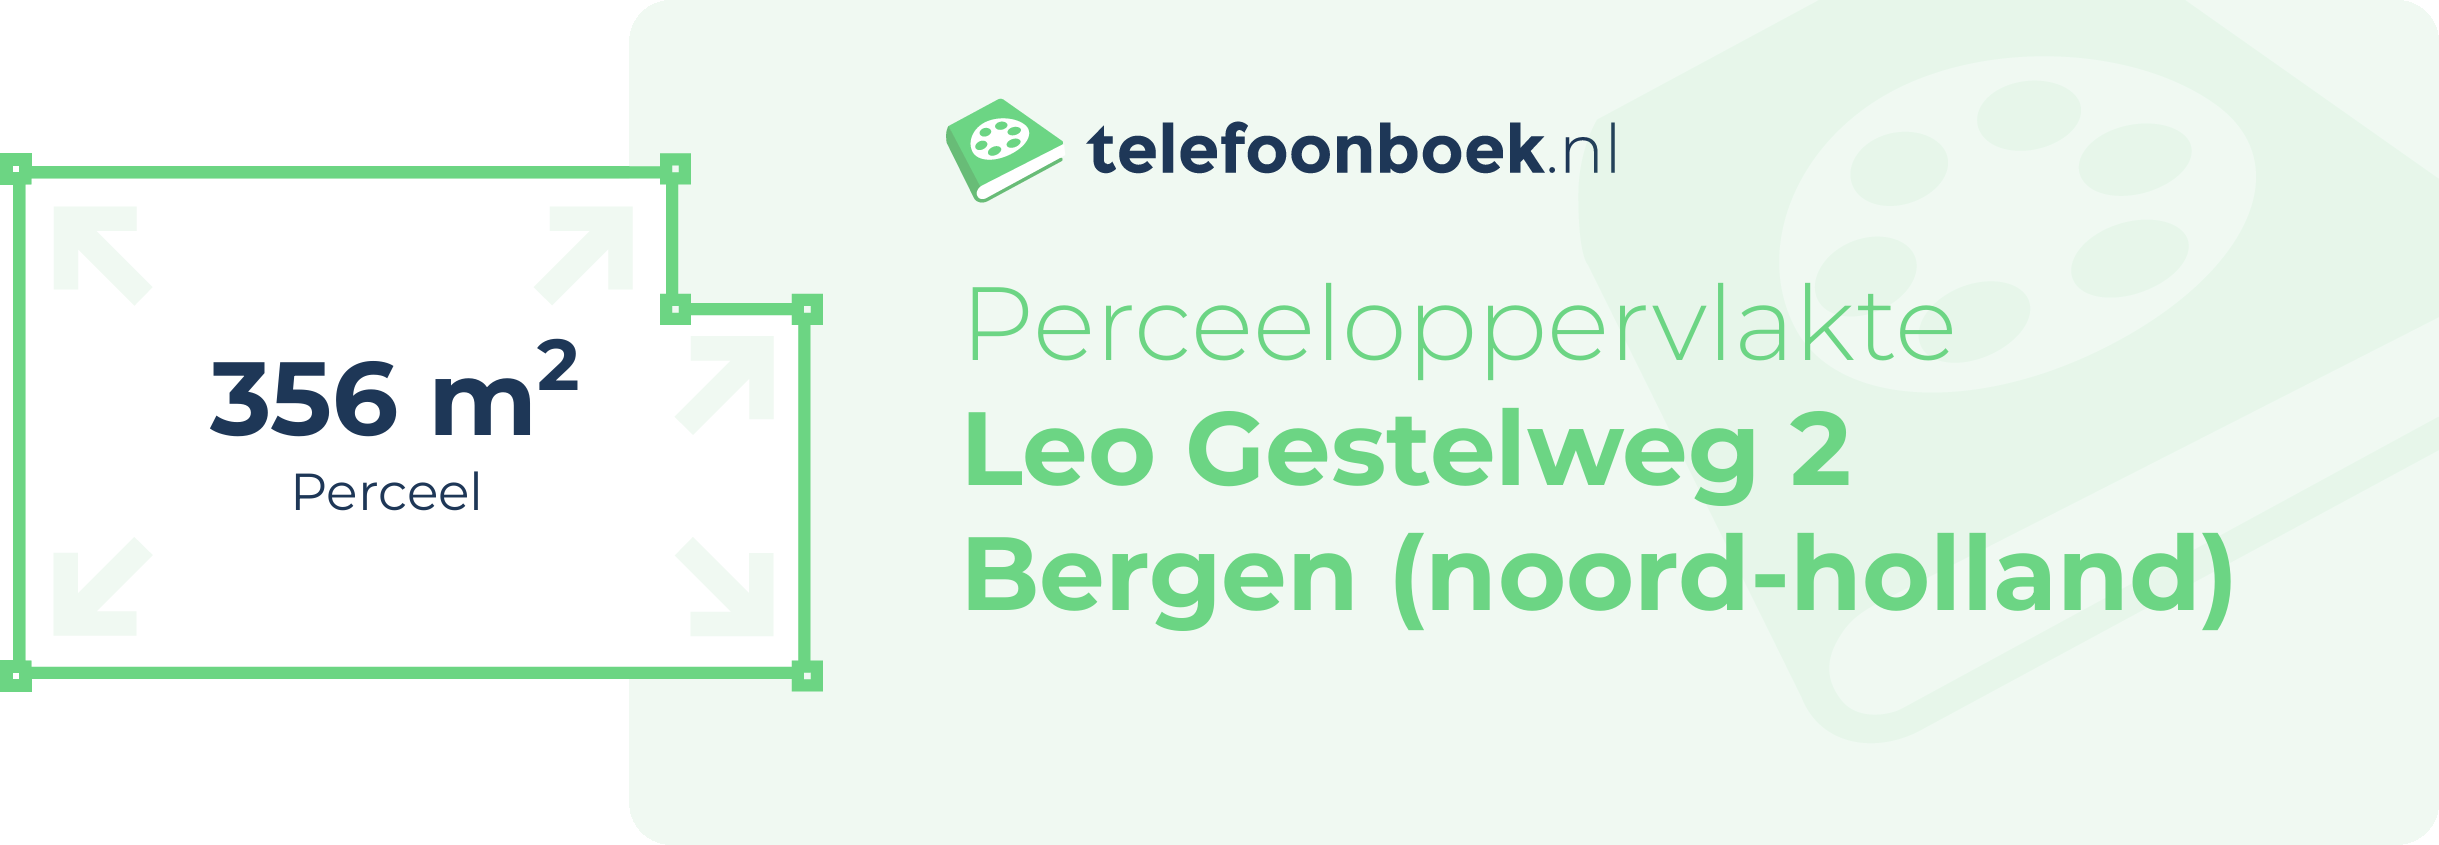 Perceeloppervlakte Leo Gestelweg 2 Bergen (Noord-Holland)